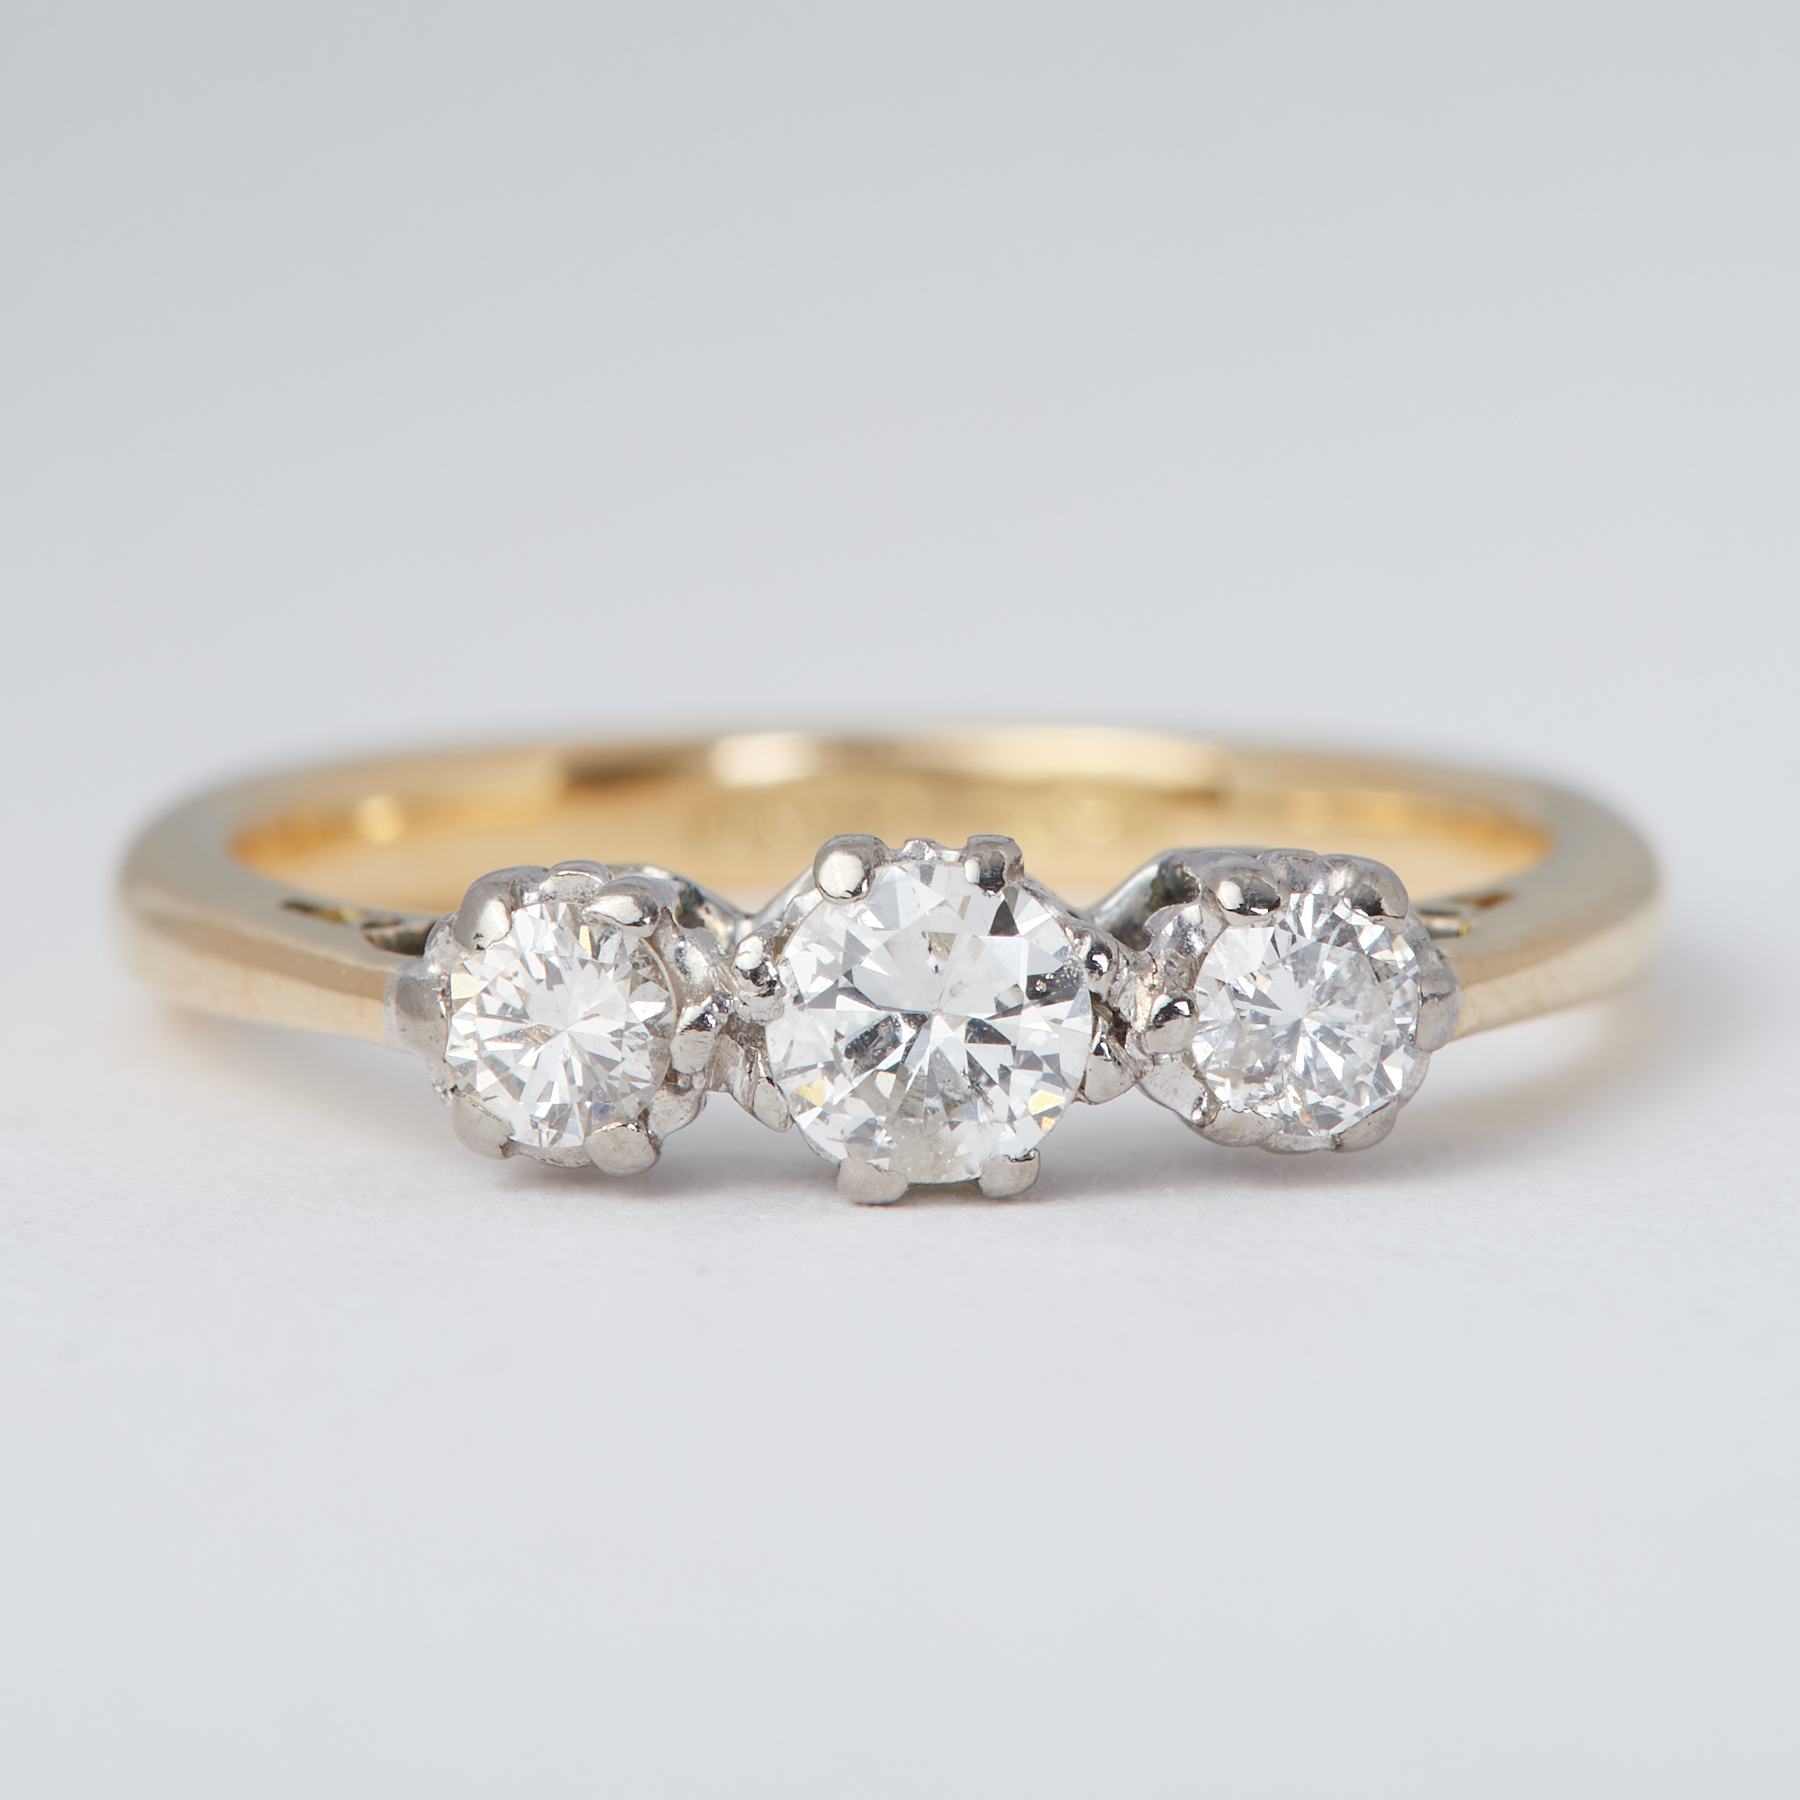 An 18ct yellow gold & platinum three stone ring set with three old round brilliant cut diamonds,